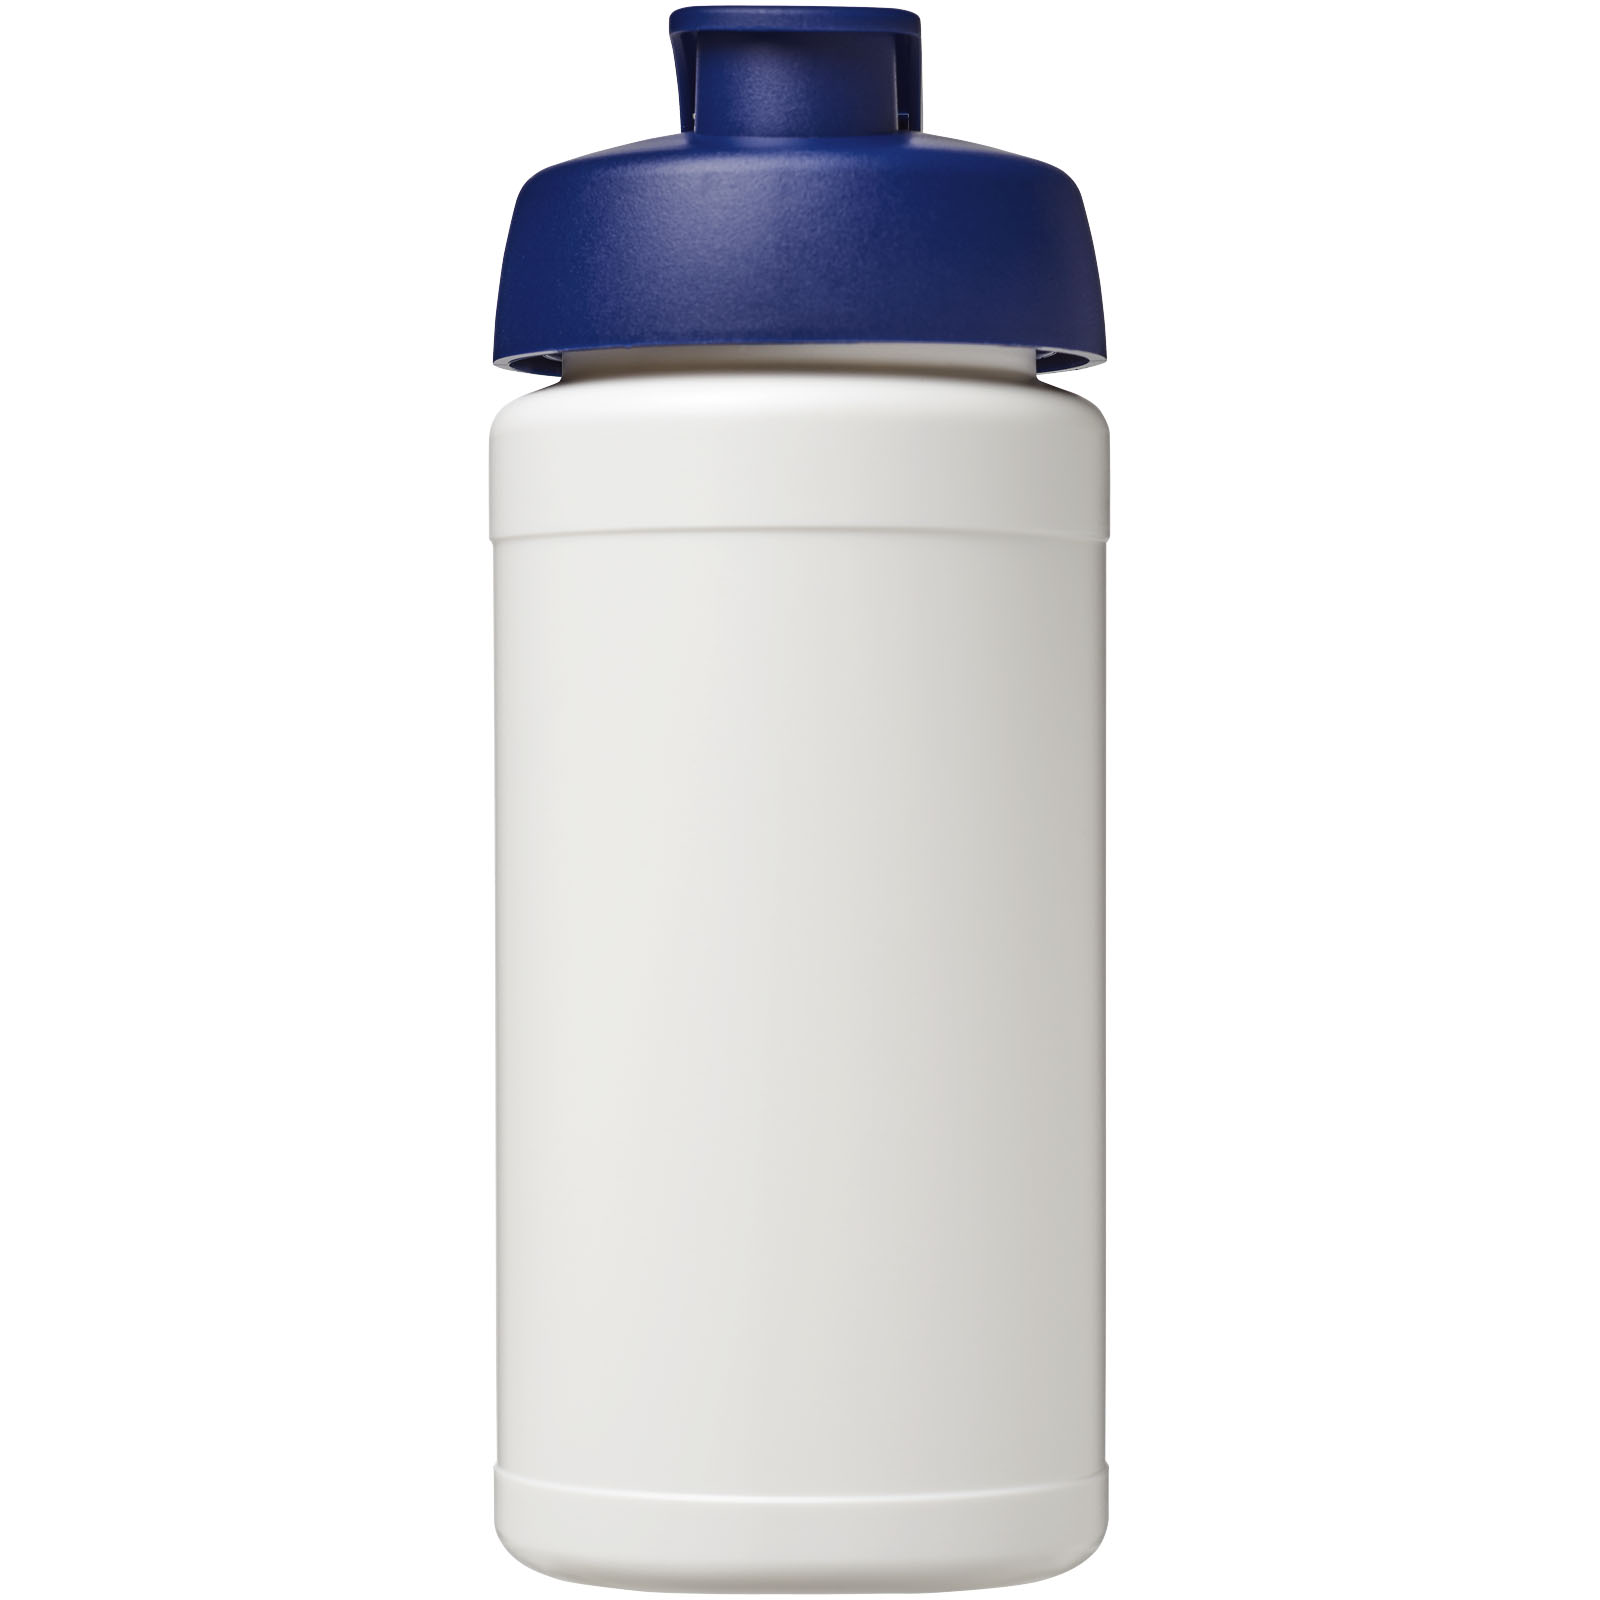 Advertising Sports bottles - Baseline 500 ml recycled sport bottle with flip lid - 1